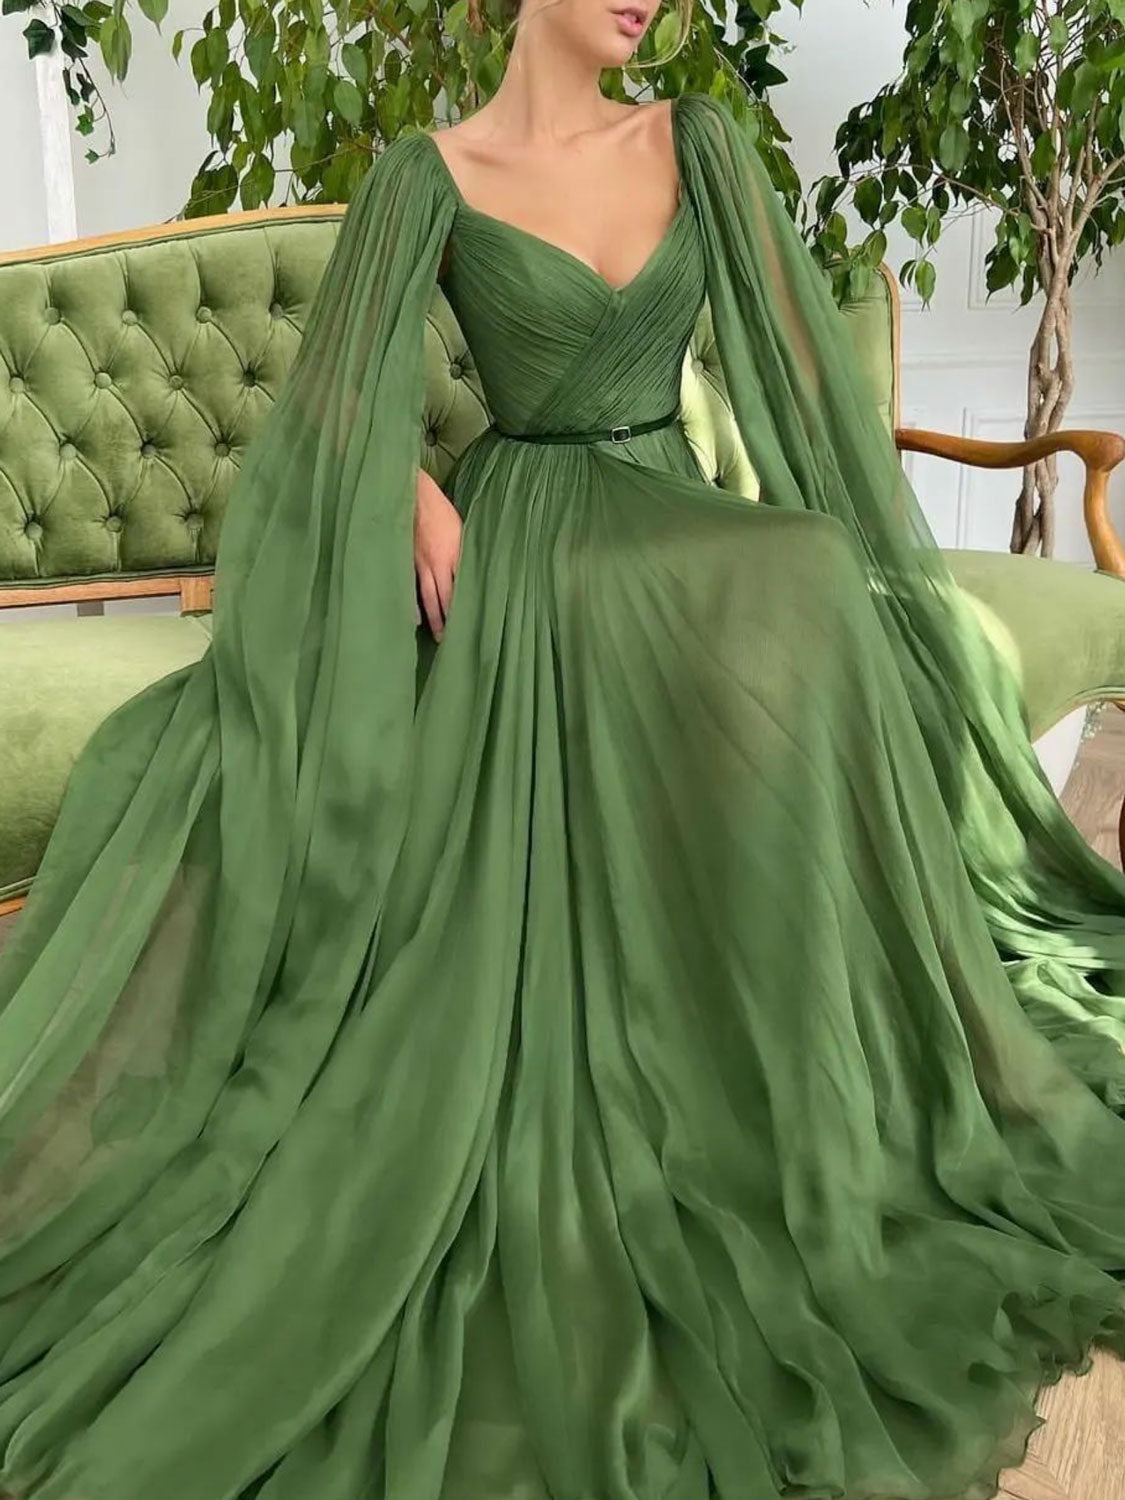 Hunter Green Dress - Long Sleeve Dress - Chiffon Maxi Dress - Lulus